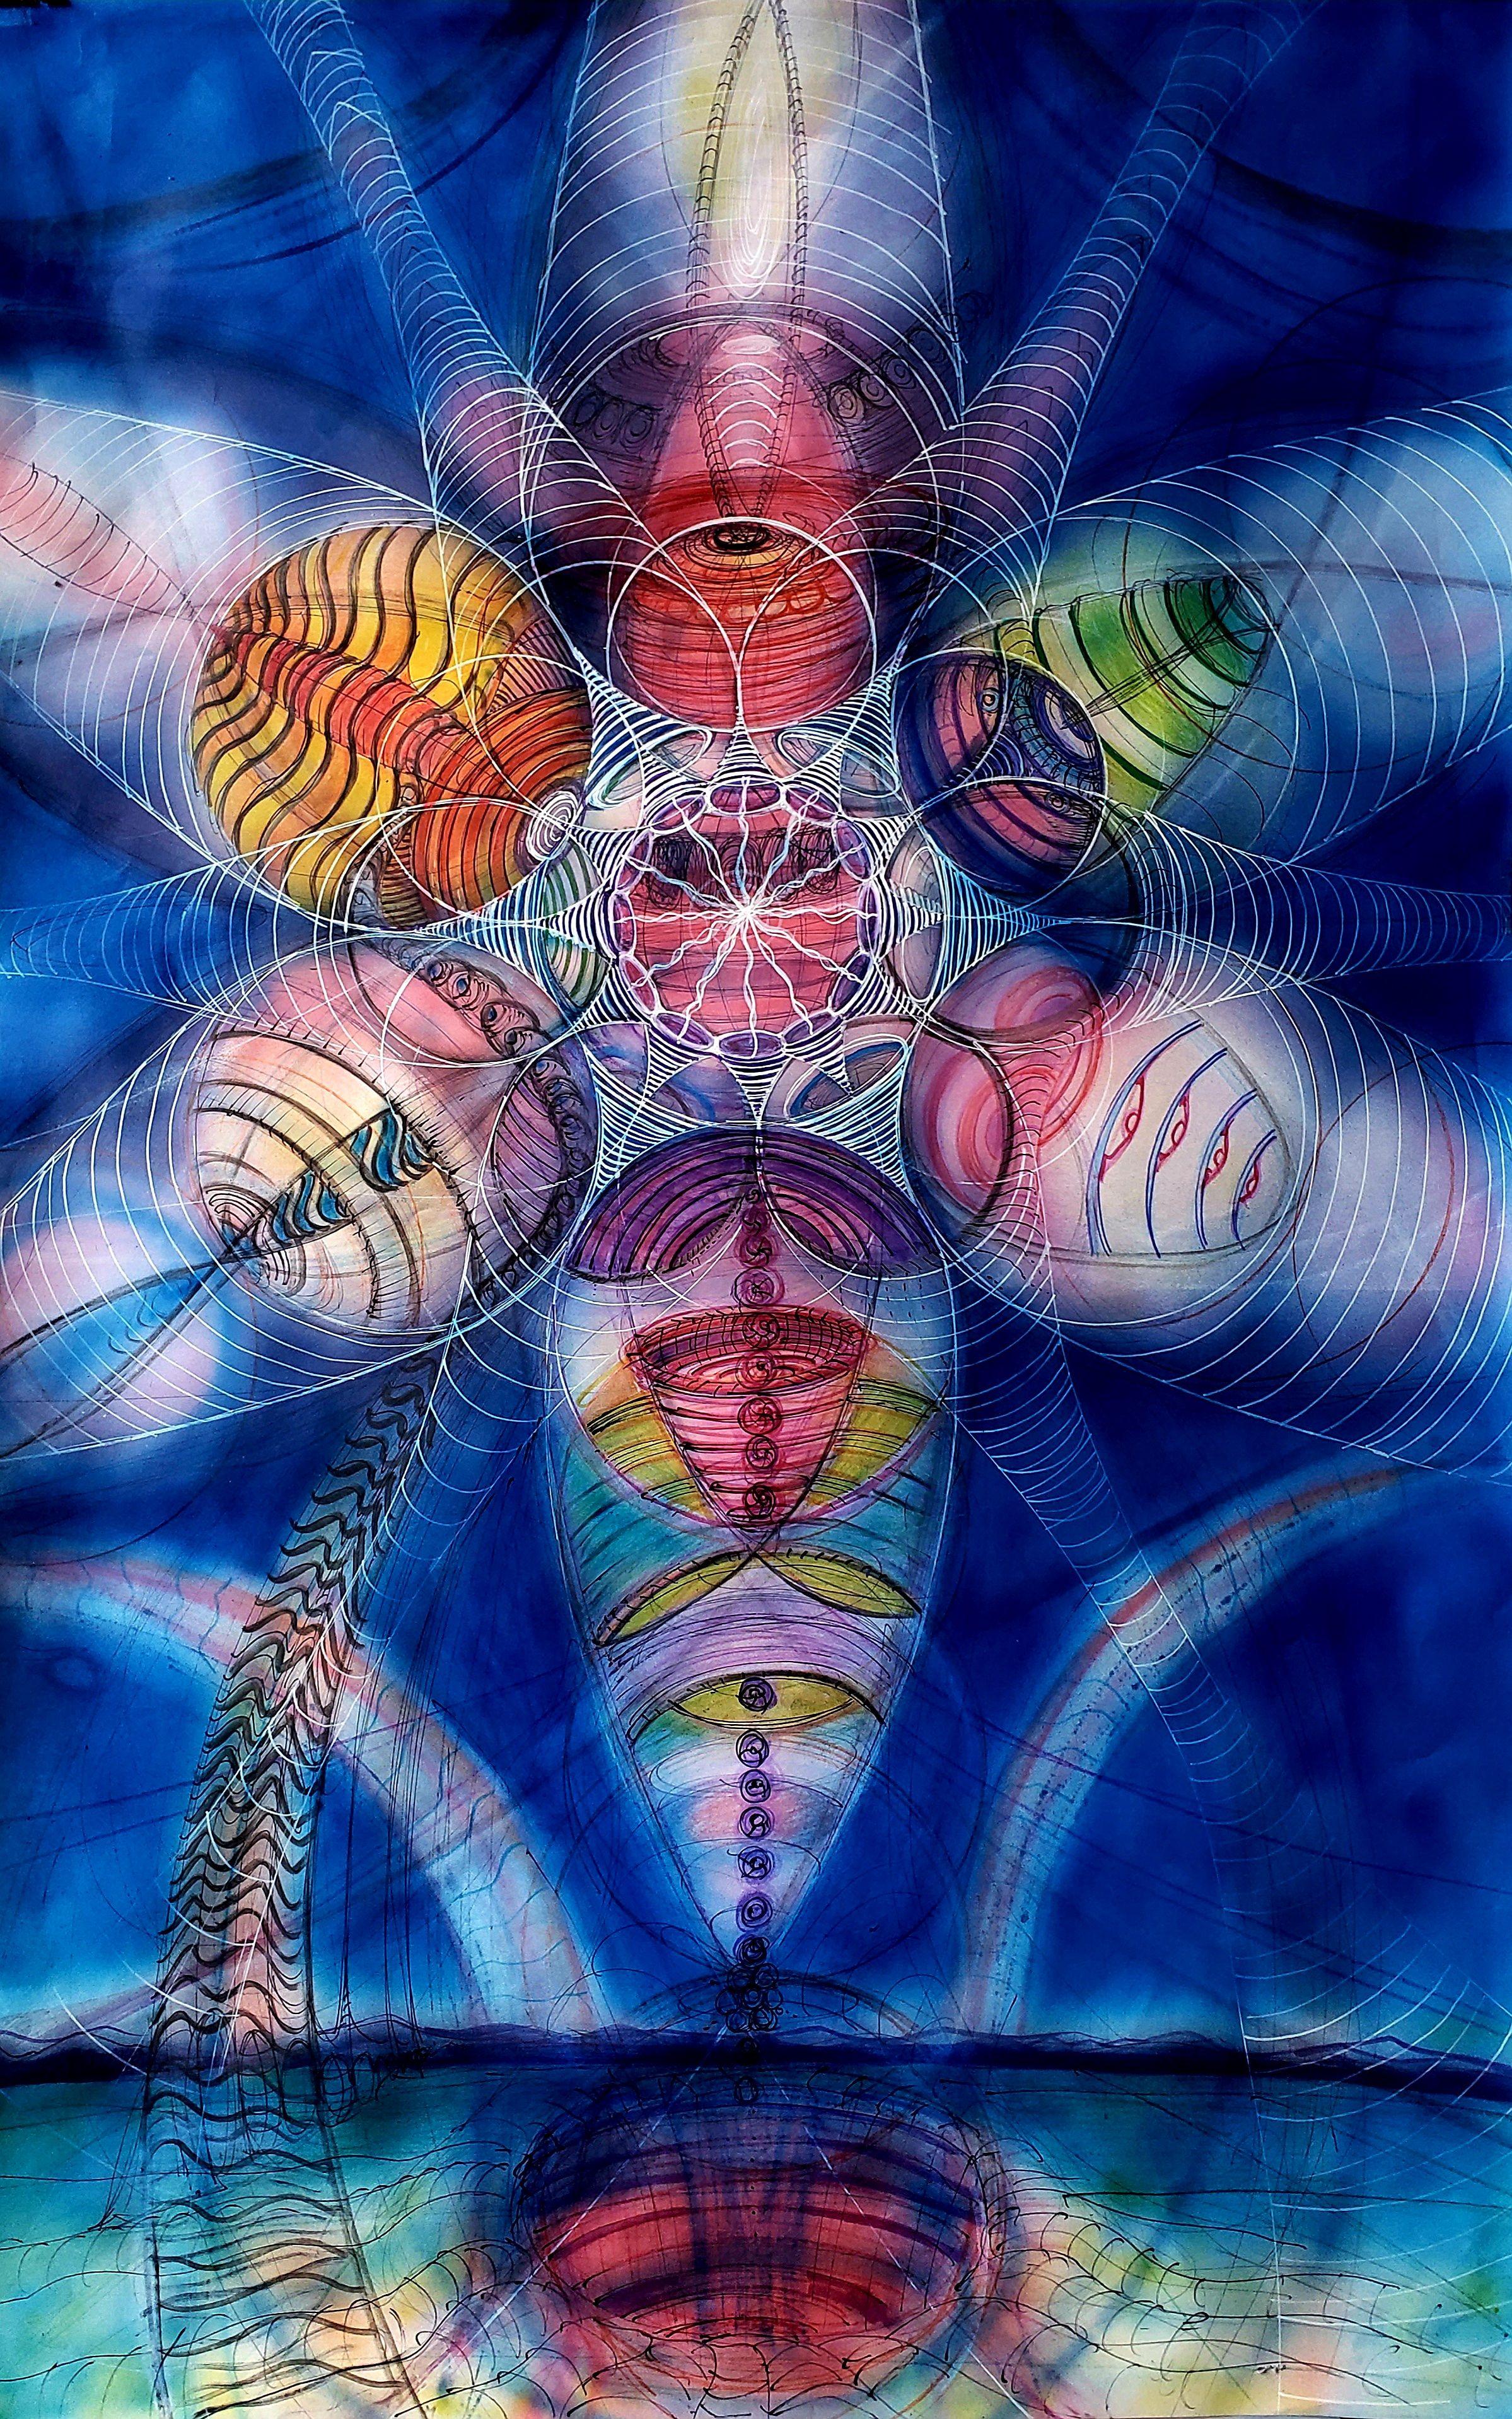 Vibrating Spheres, Mixed Media on Paper - Mixed Media Art by Sanjoy Das